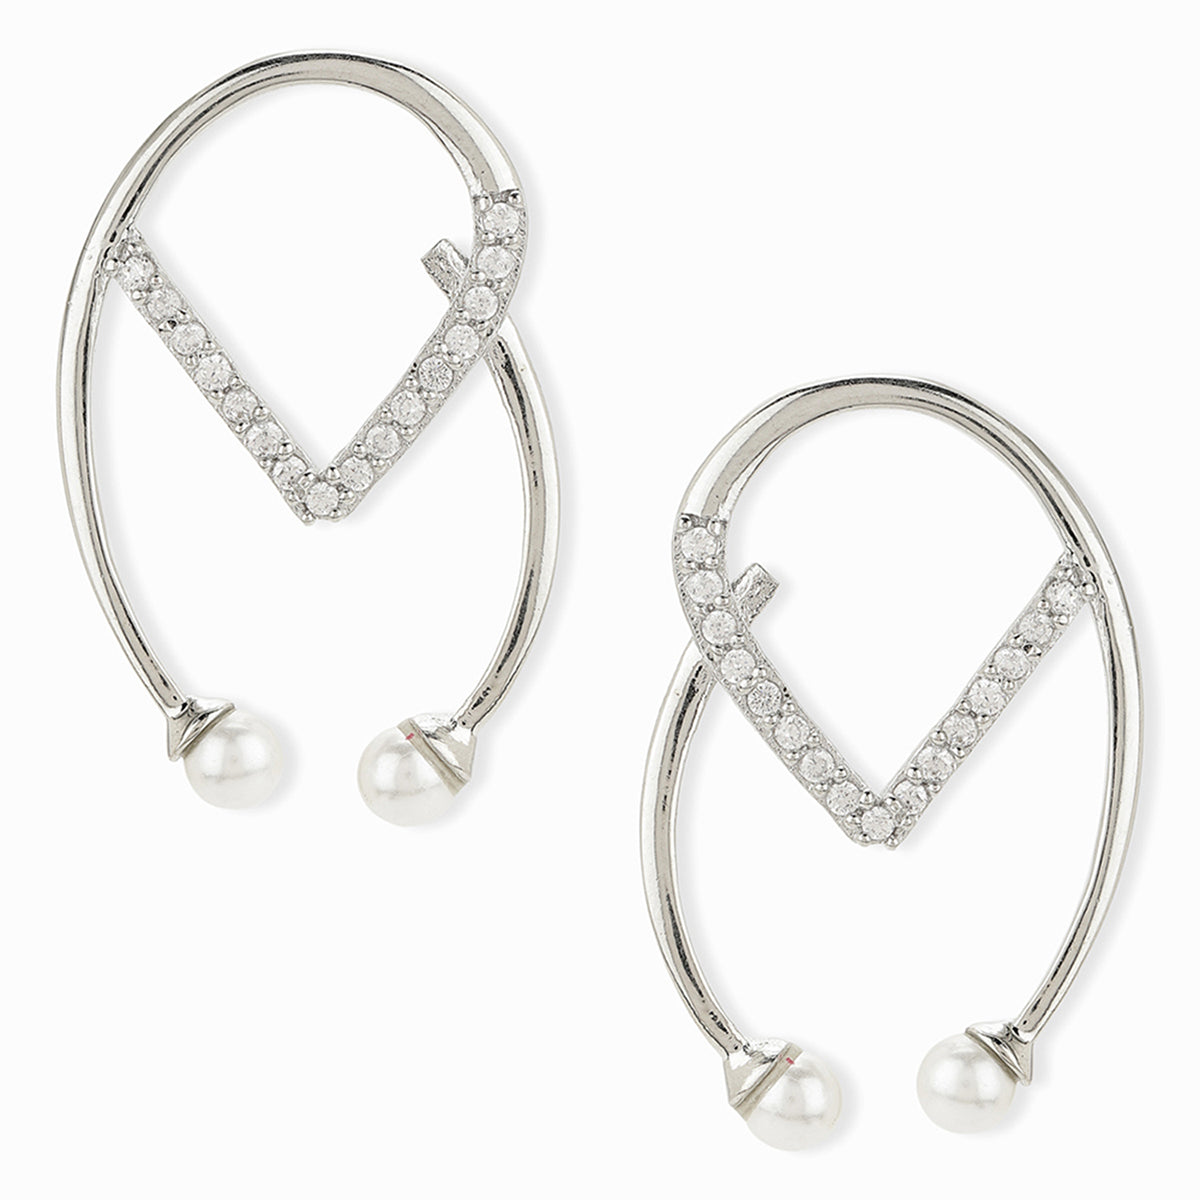 Buy Voylla Sparkling Elegance Marquise Cut CZ Jhumki Earrings at Amazon.in